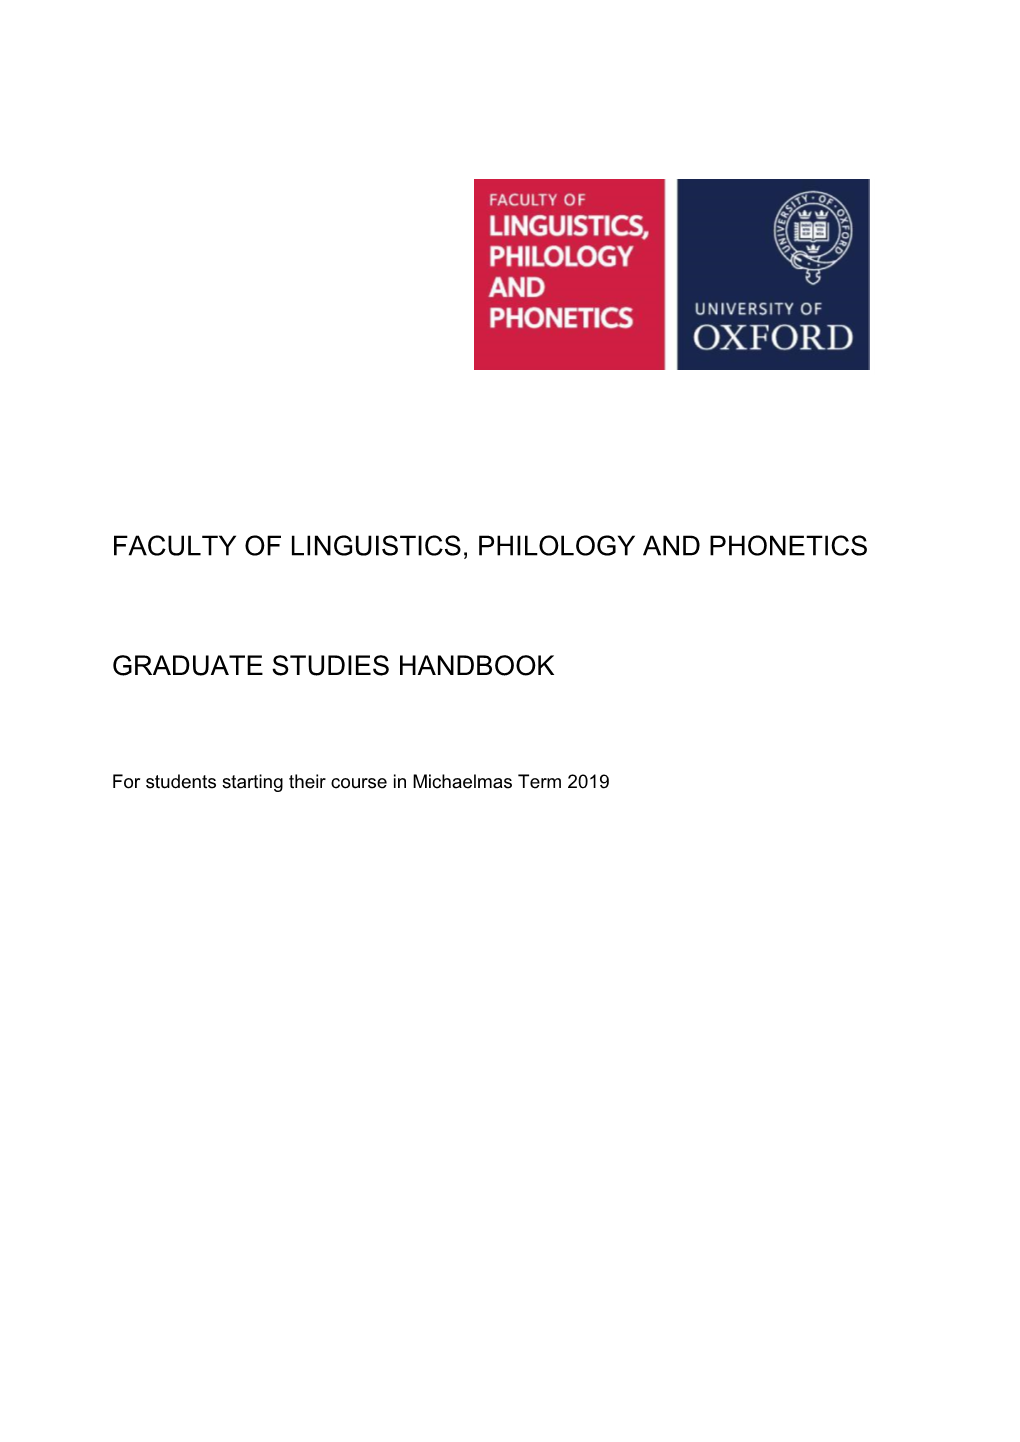 Faculty of Linguistics, Philology and Phonetics Graduate Studies Handbook